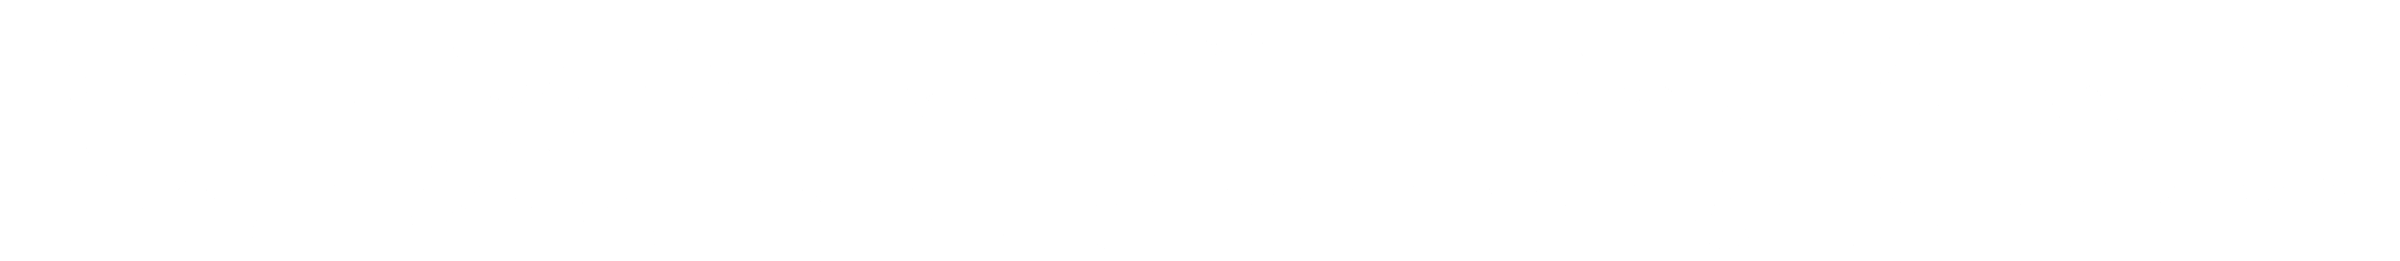 the-sydney-morning-herald-logo-black-and-white